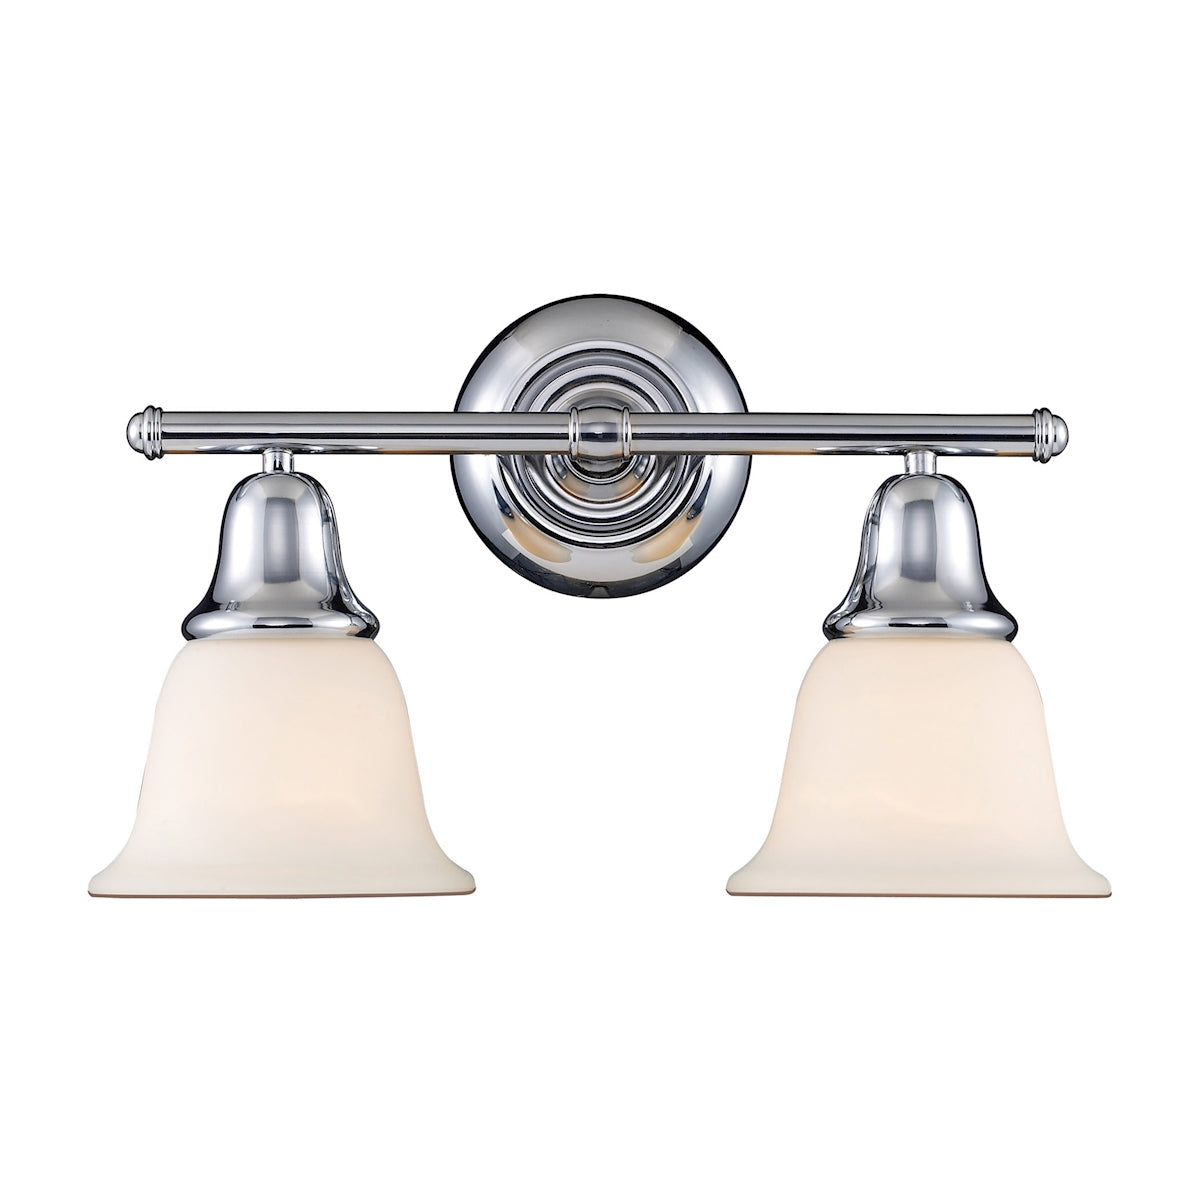 ELK Lighting 67011-2 Berwick 2-Light Vanity Lamp in Polished Chrome with White Glass